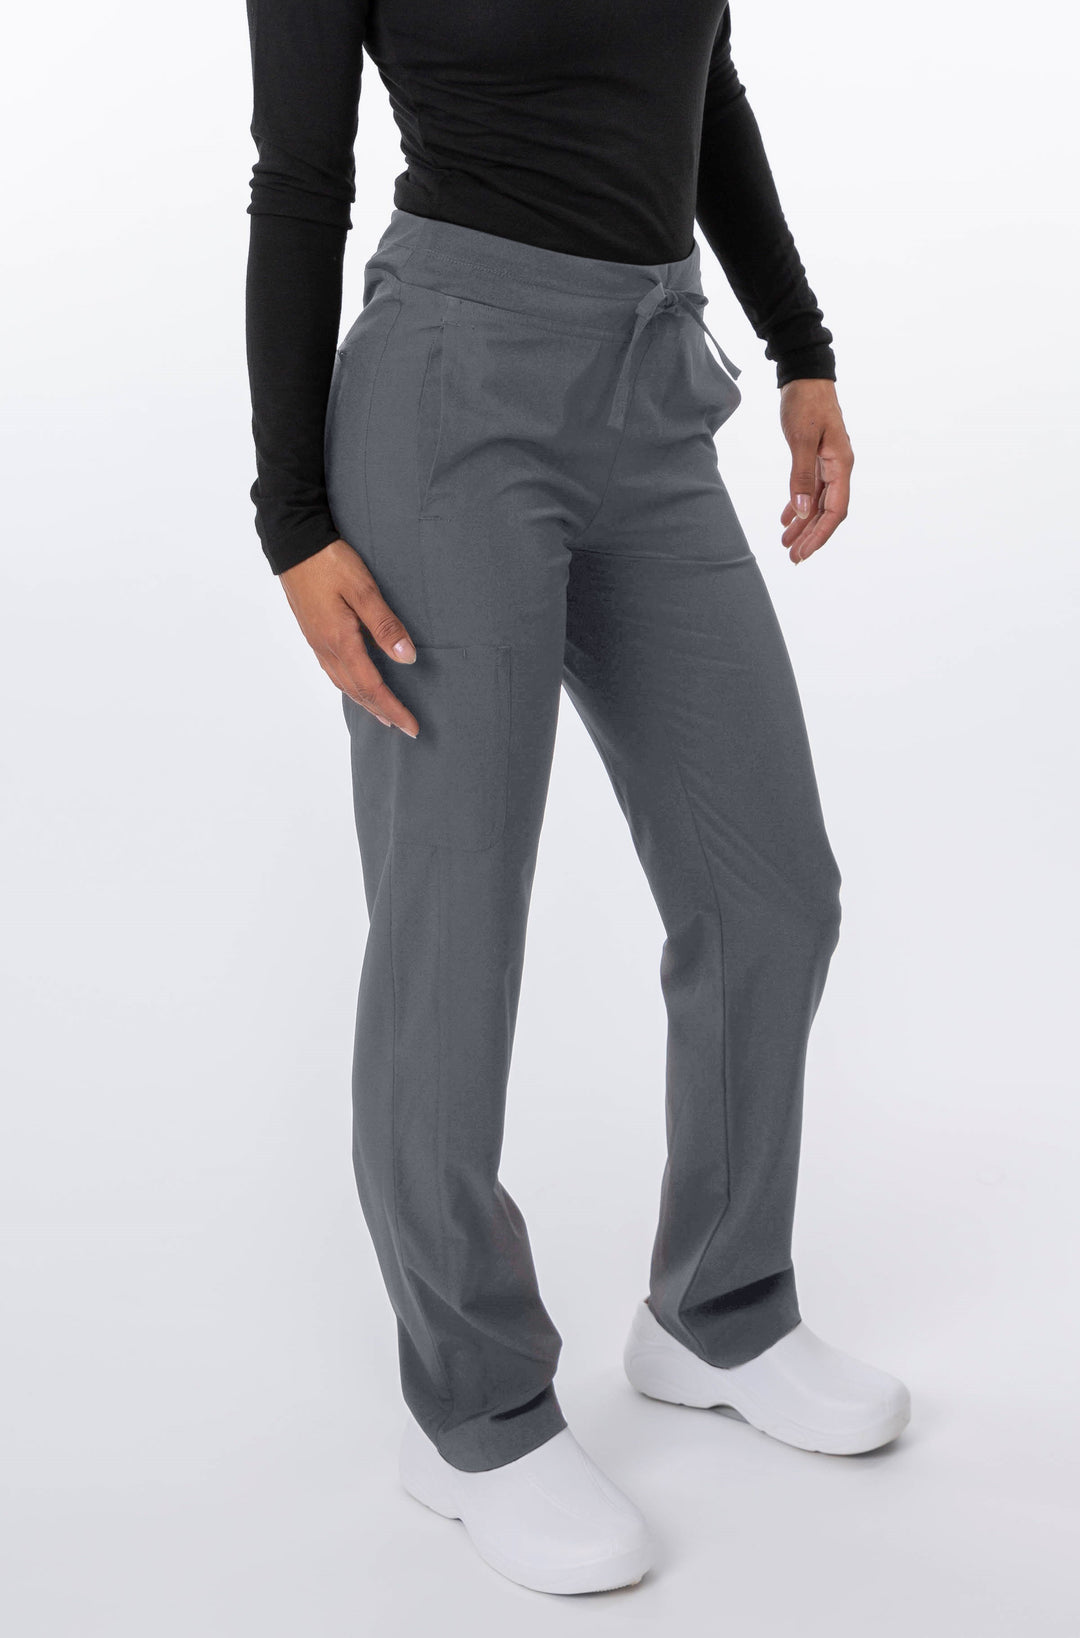 Zinnia 18-1044 Yoga-Style Scrub Pants Modern Design & Ultimate Comfort –  Scrub Nation Canada